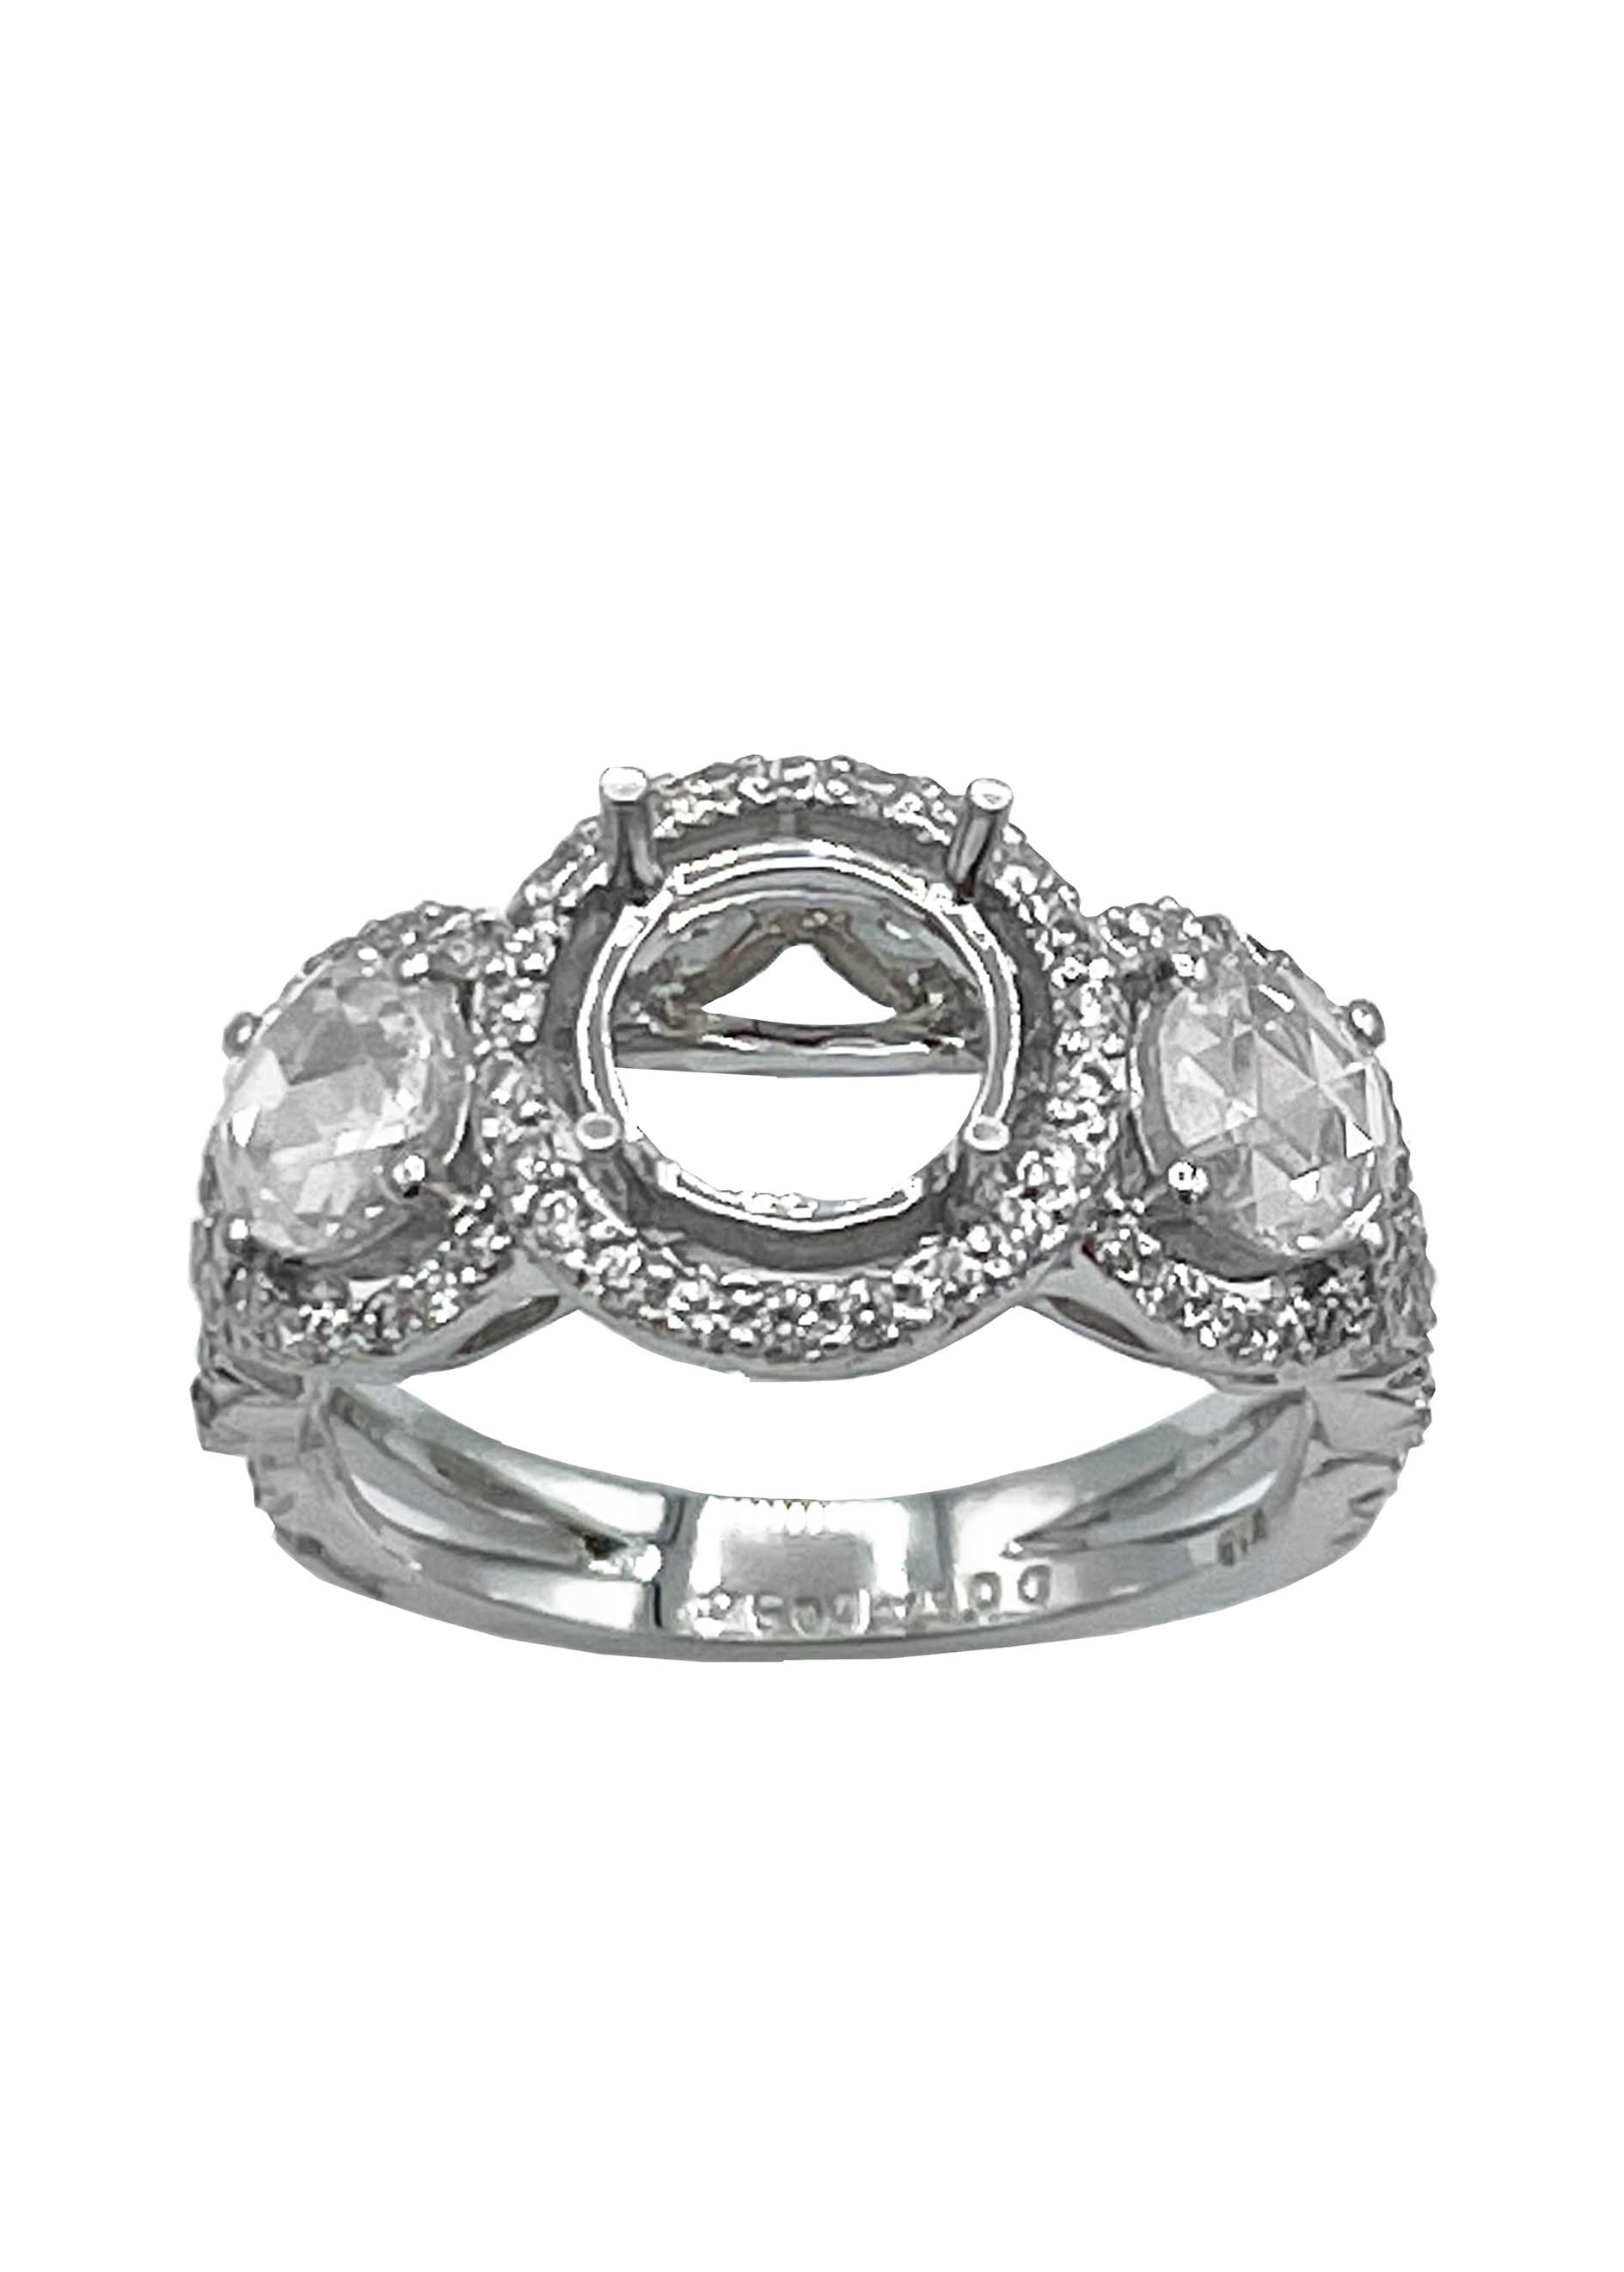 18k White Gold Diamond Ring Setting Image